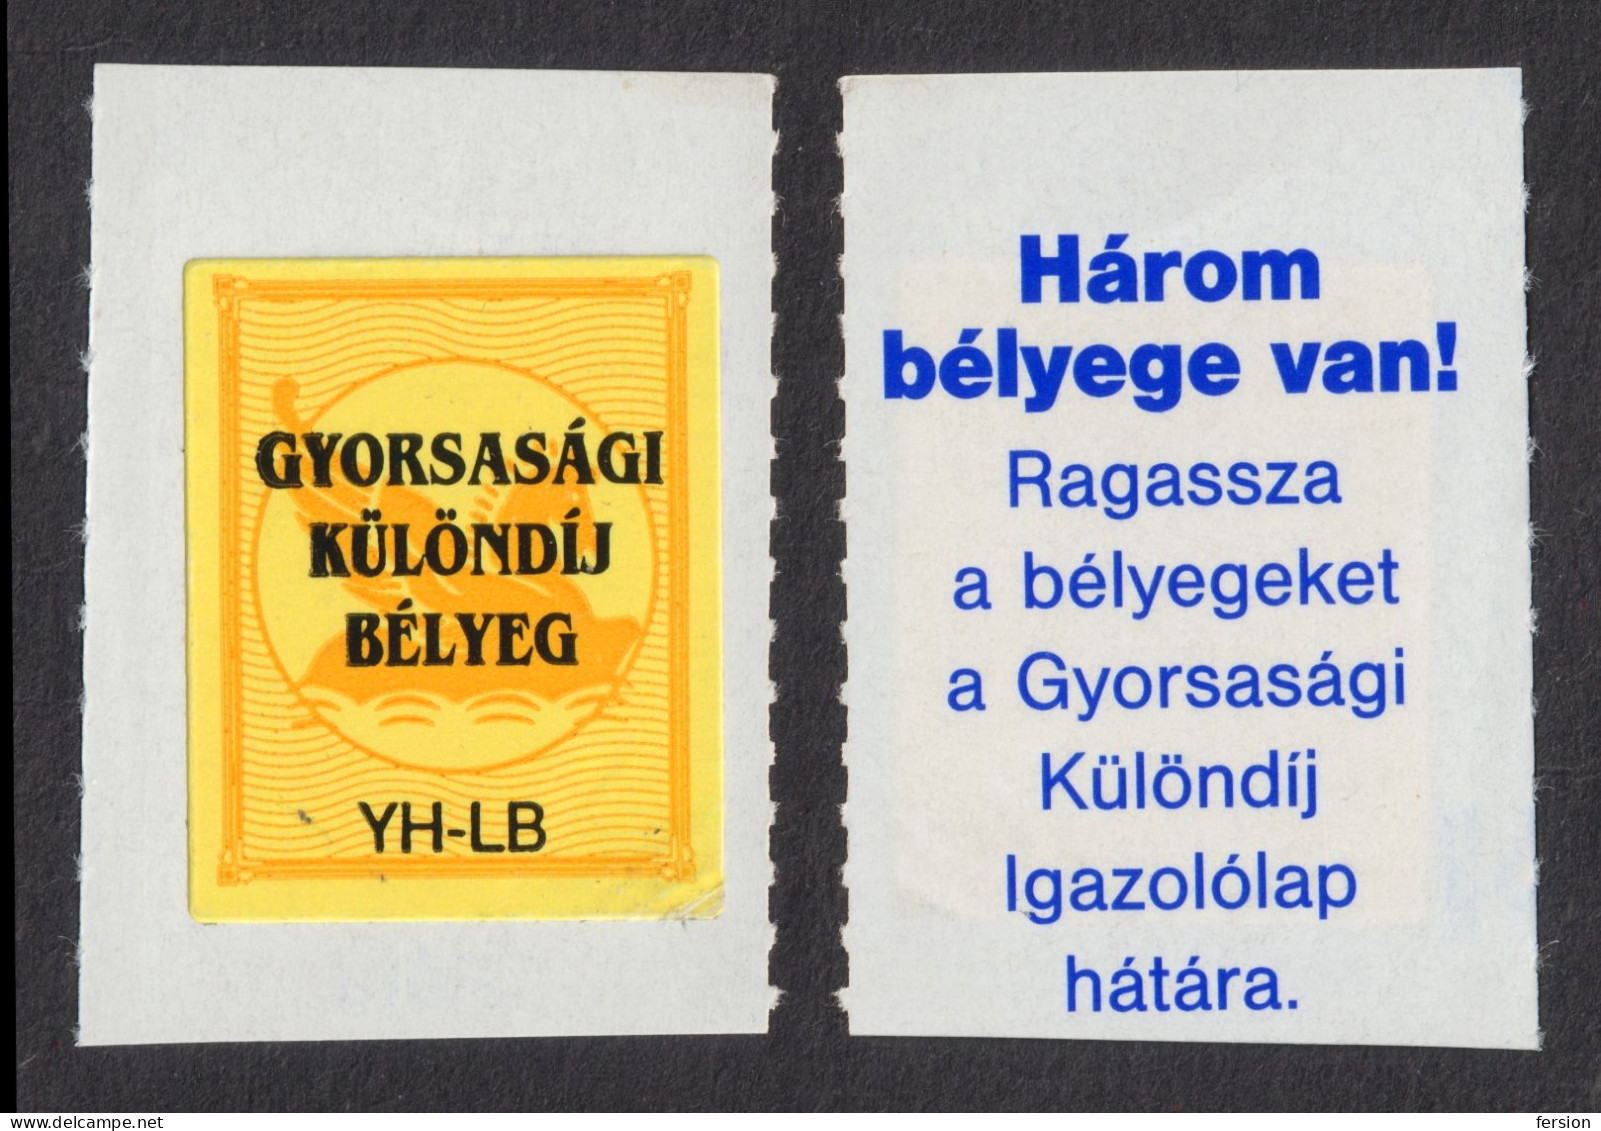 Pegasus GREEK Mythology / Reader's Digest - Self Adhesive LABEL Vignette Trading Stamp Voucher Coupon 2000's Hungary - Mythology